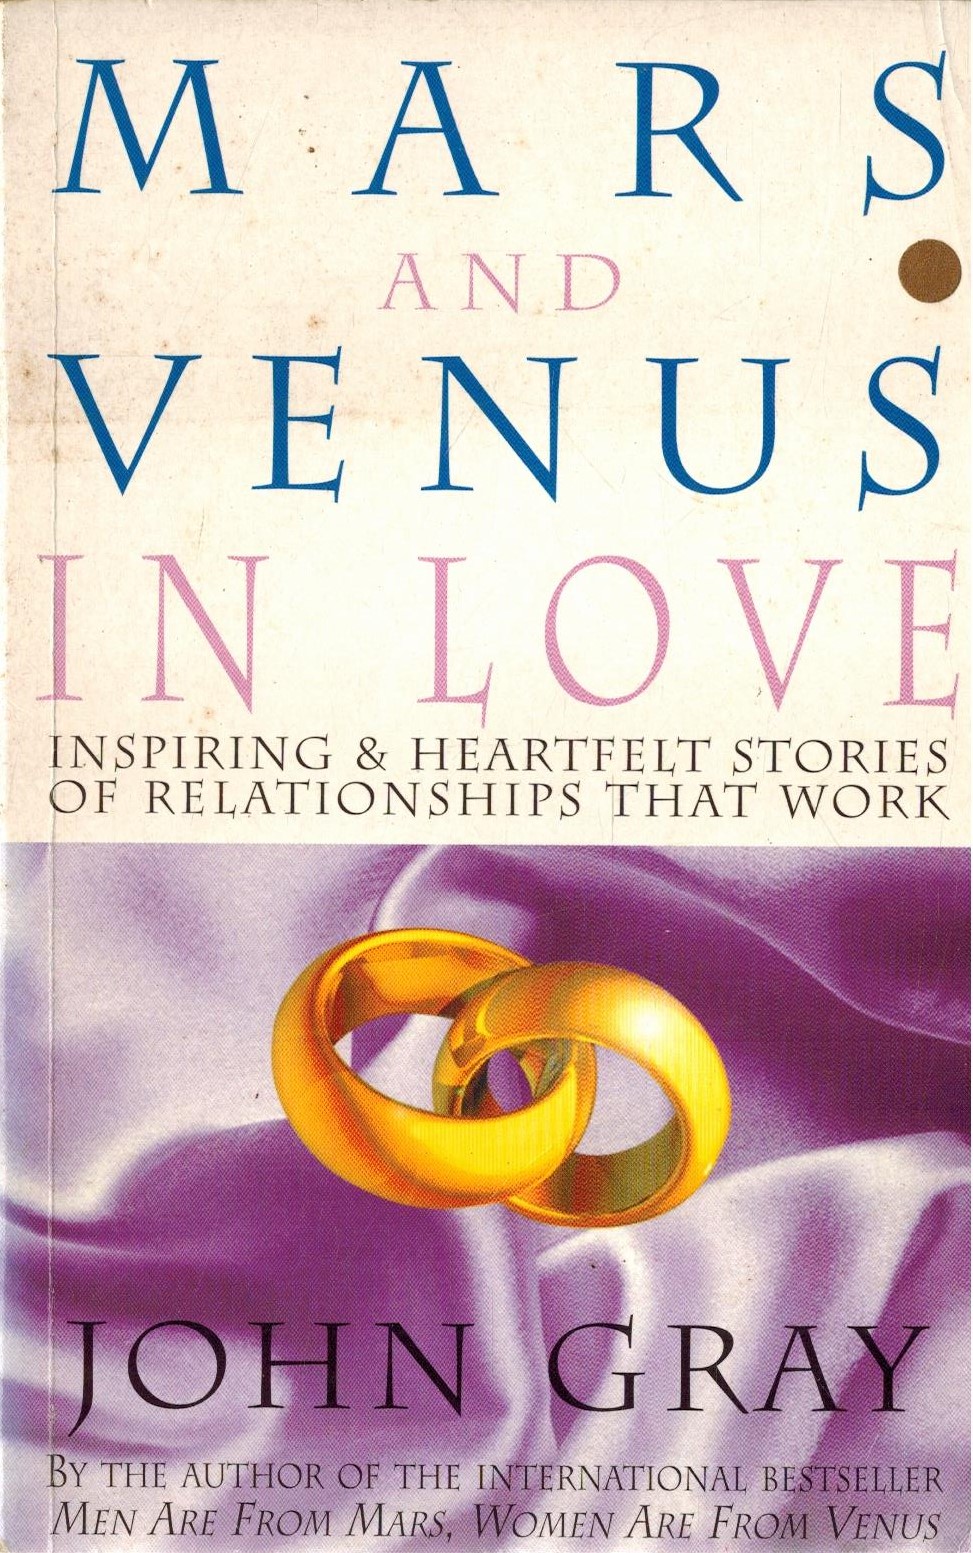 MARS AND VENUS IN LOVE